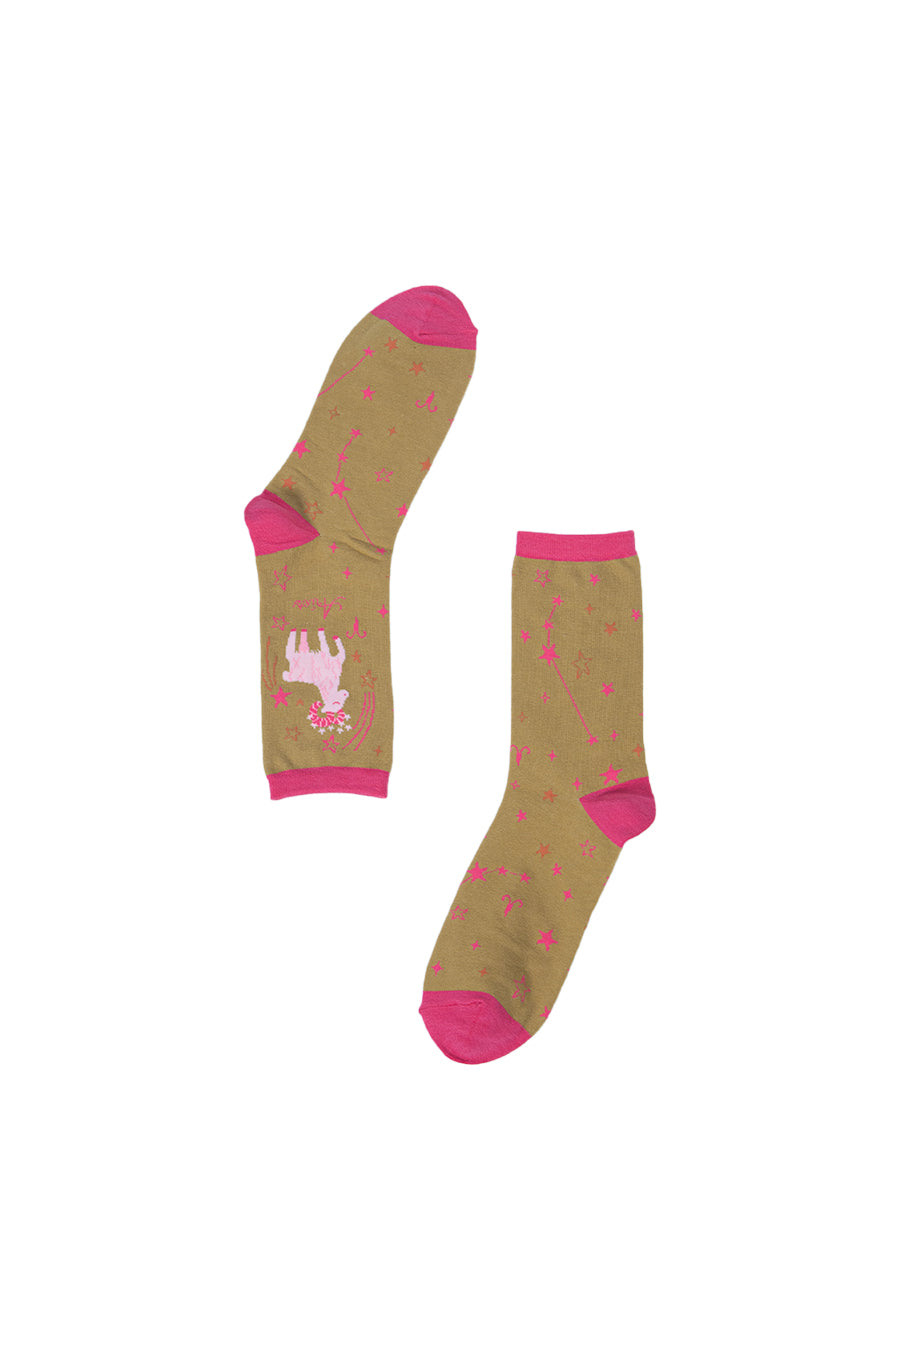 aries horoscope socks in mustard yellow and pink